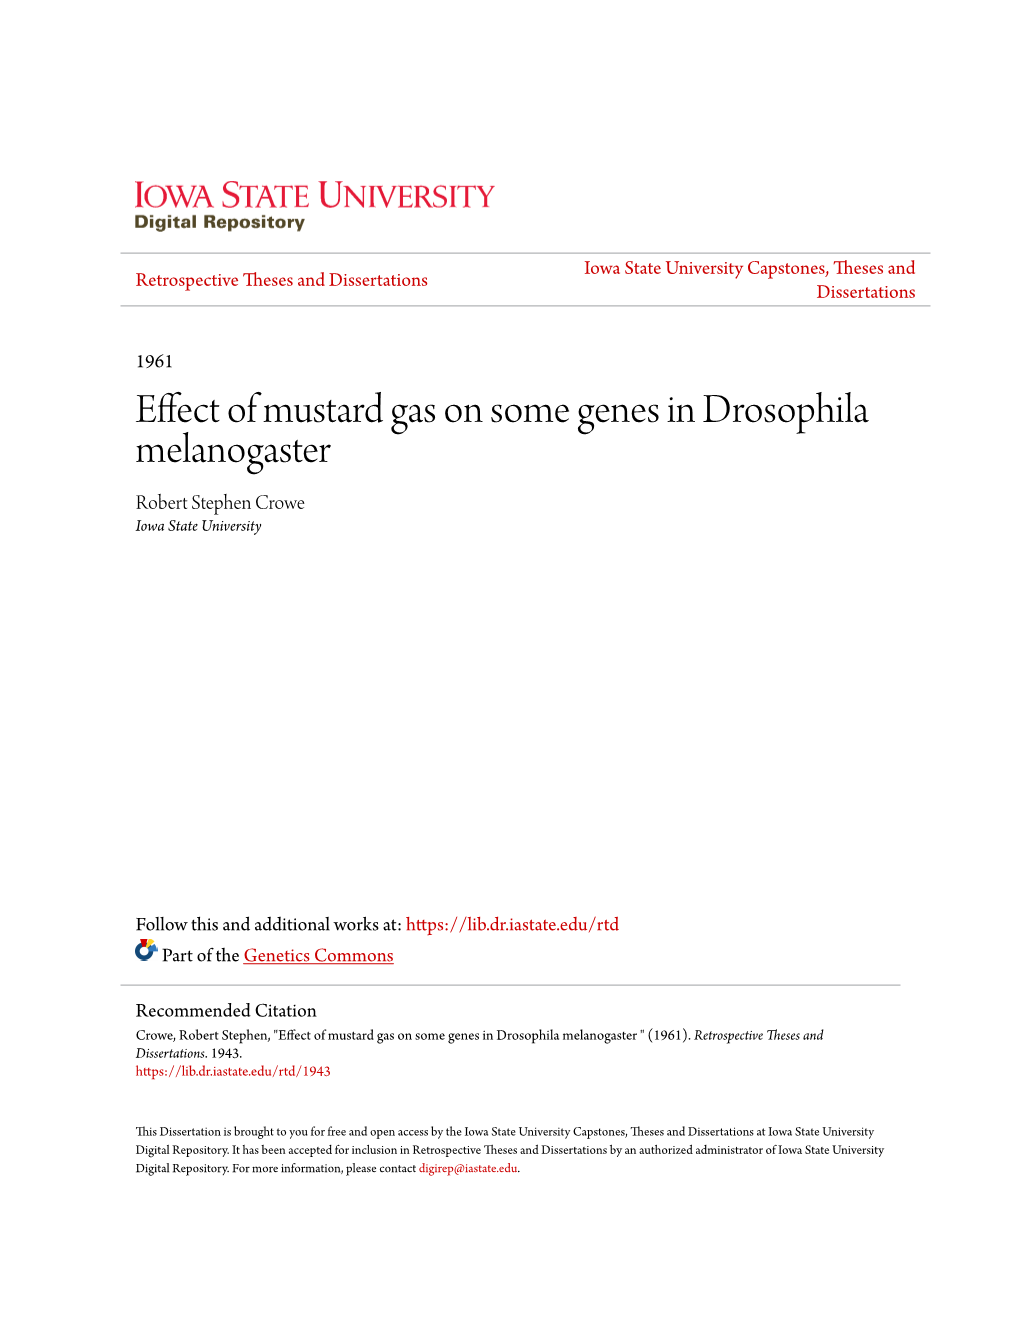 Effect of Mustard Gas on Some Genes in Drosophila Melanogaster Robert Stephen Crowe Iowa State University